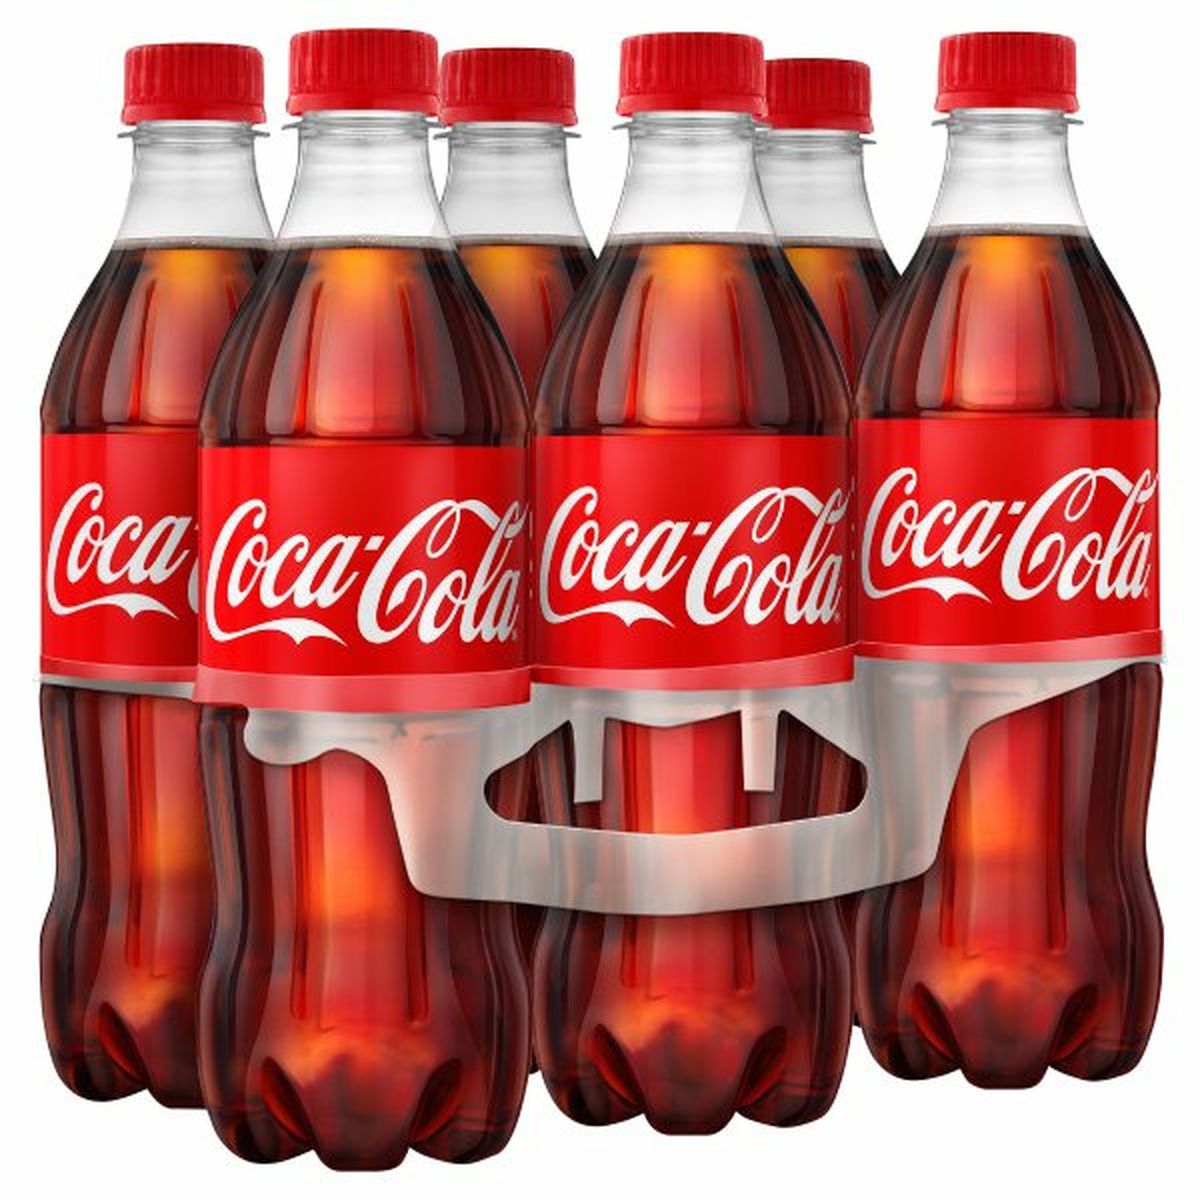 Calories in Coca-Cola Cola